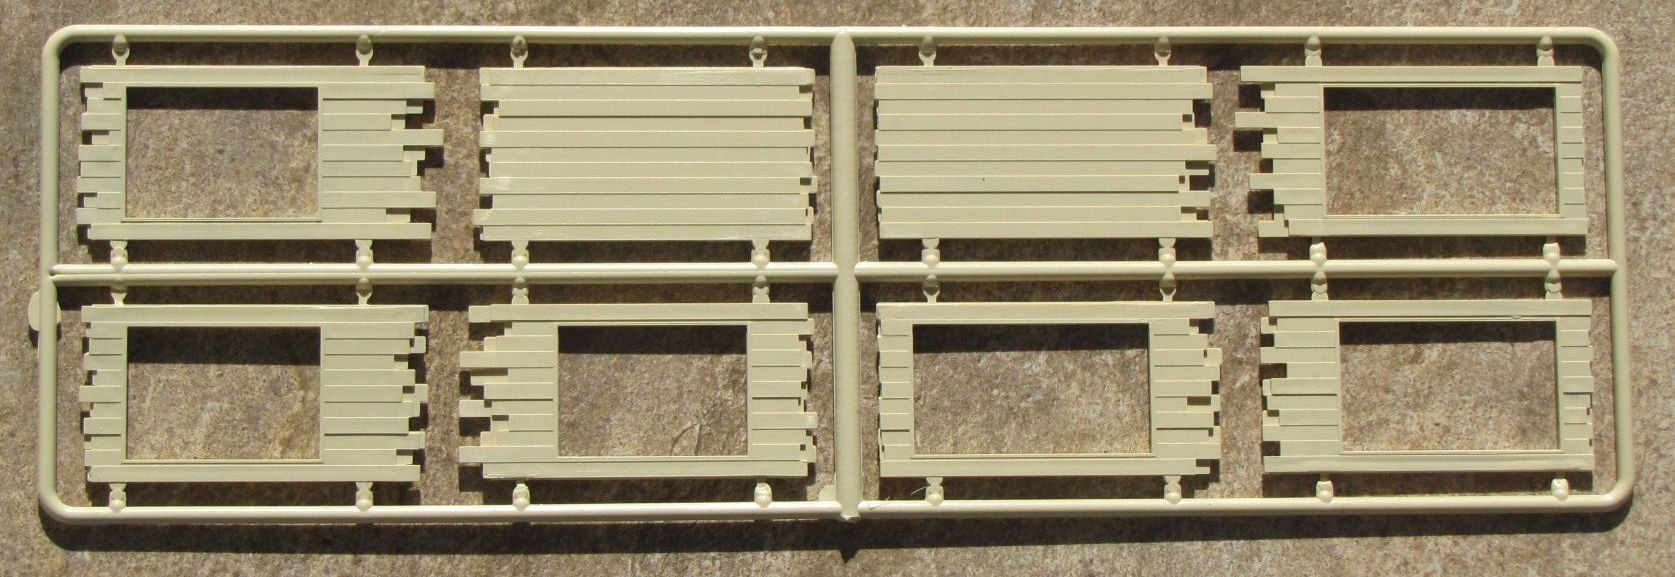 OMM 3012 Add-On Sprue of 8-Panels of Modular Lumber